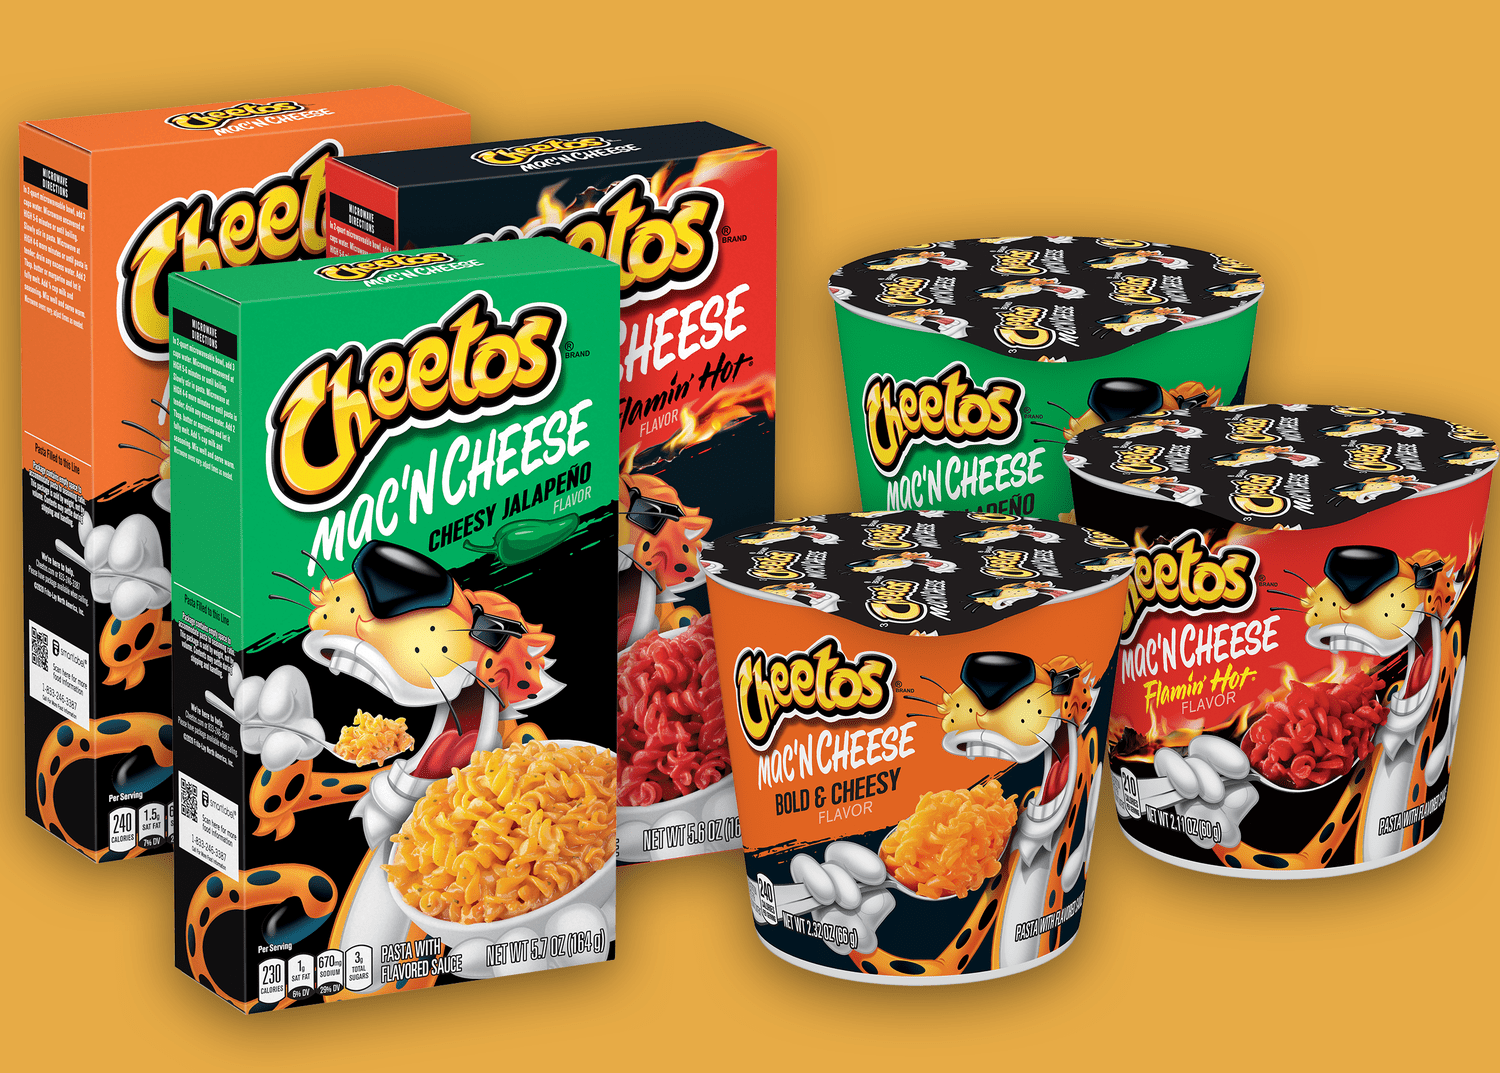 Cheetos mac n' cheese will be available at walmart starting this week,...